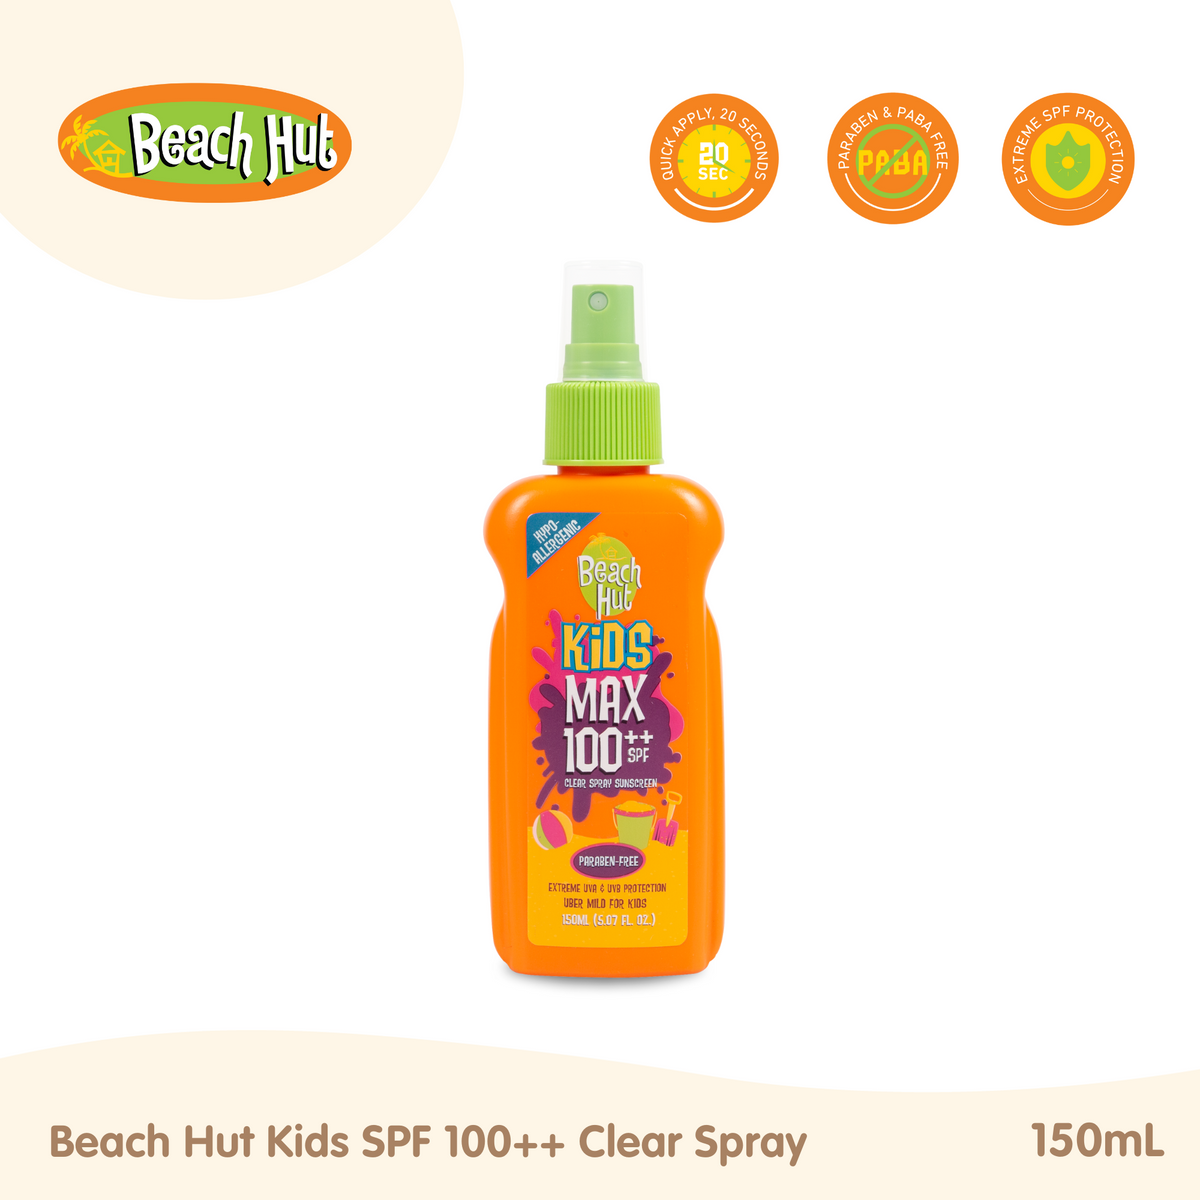 Beach Hut Kids Max 100++ Spray 150ml